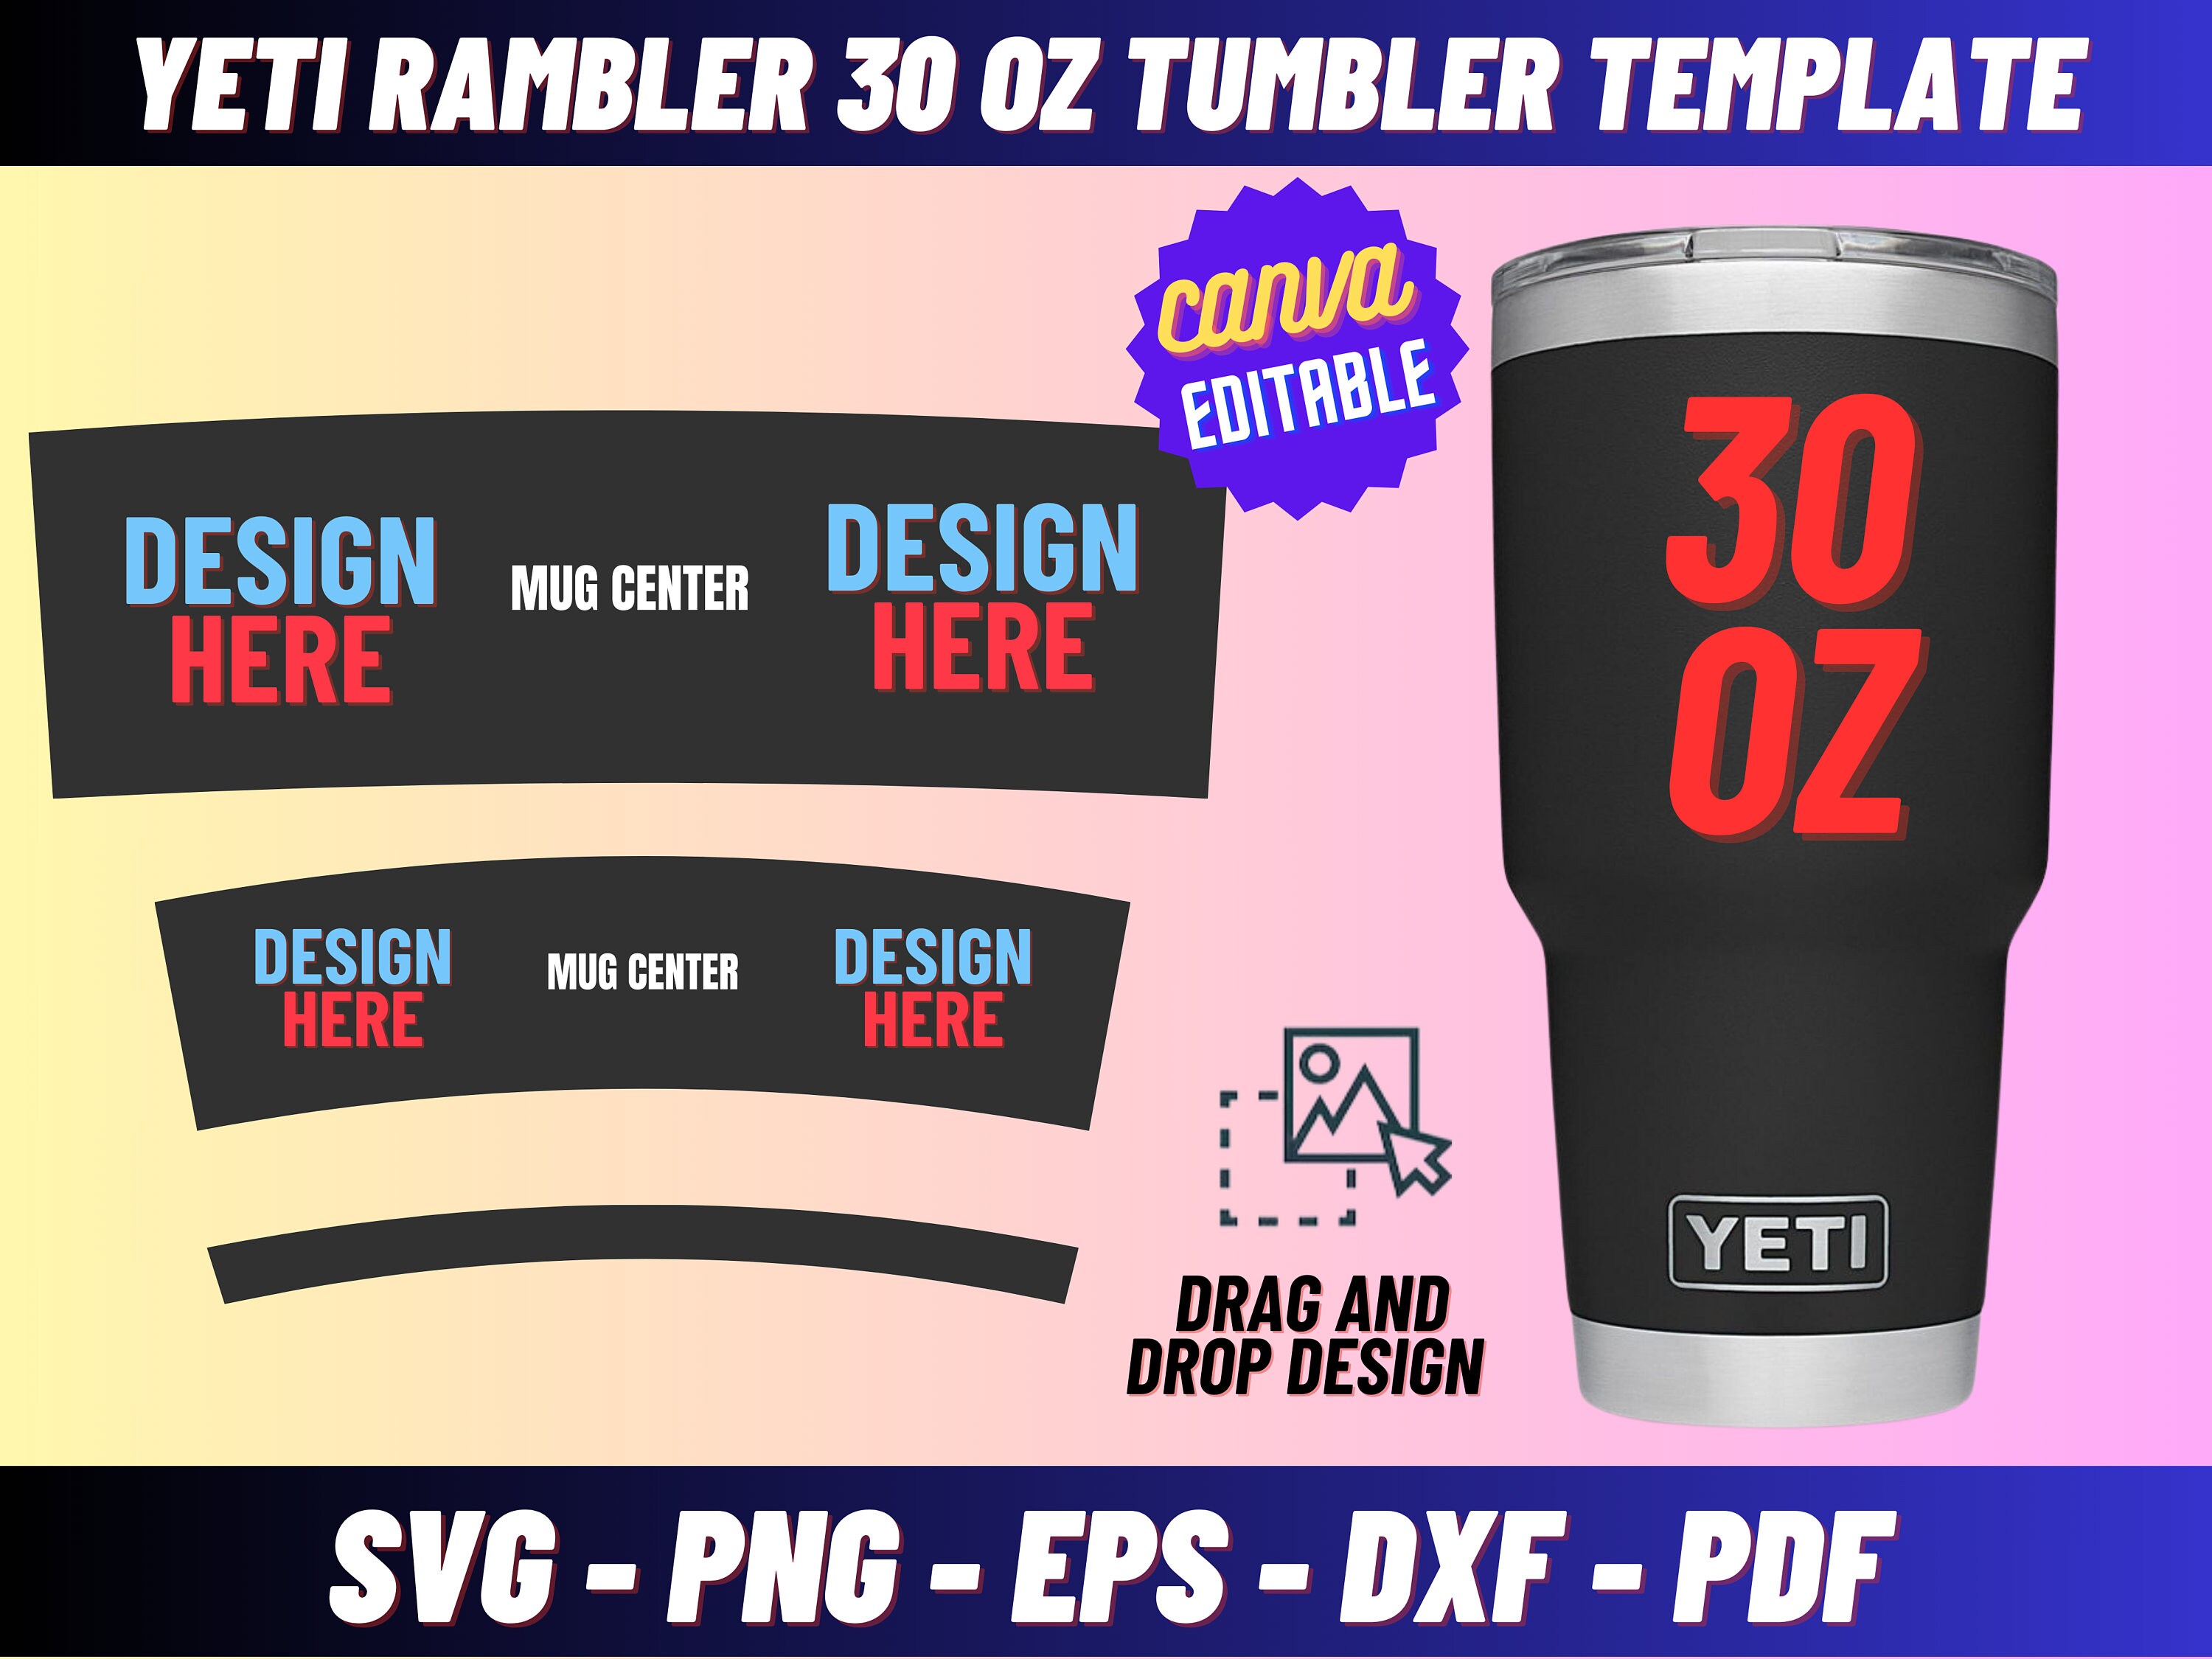 Yeti Rambler, YETI Rambler 10oz Template Full Wrap for Rambler